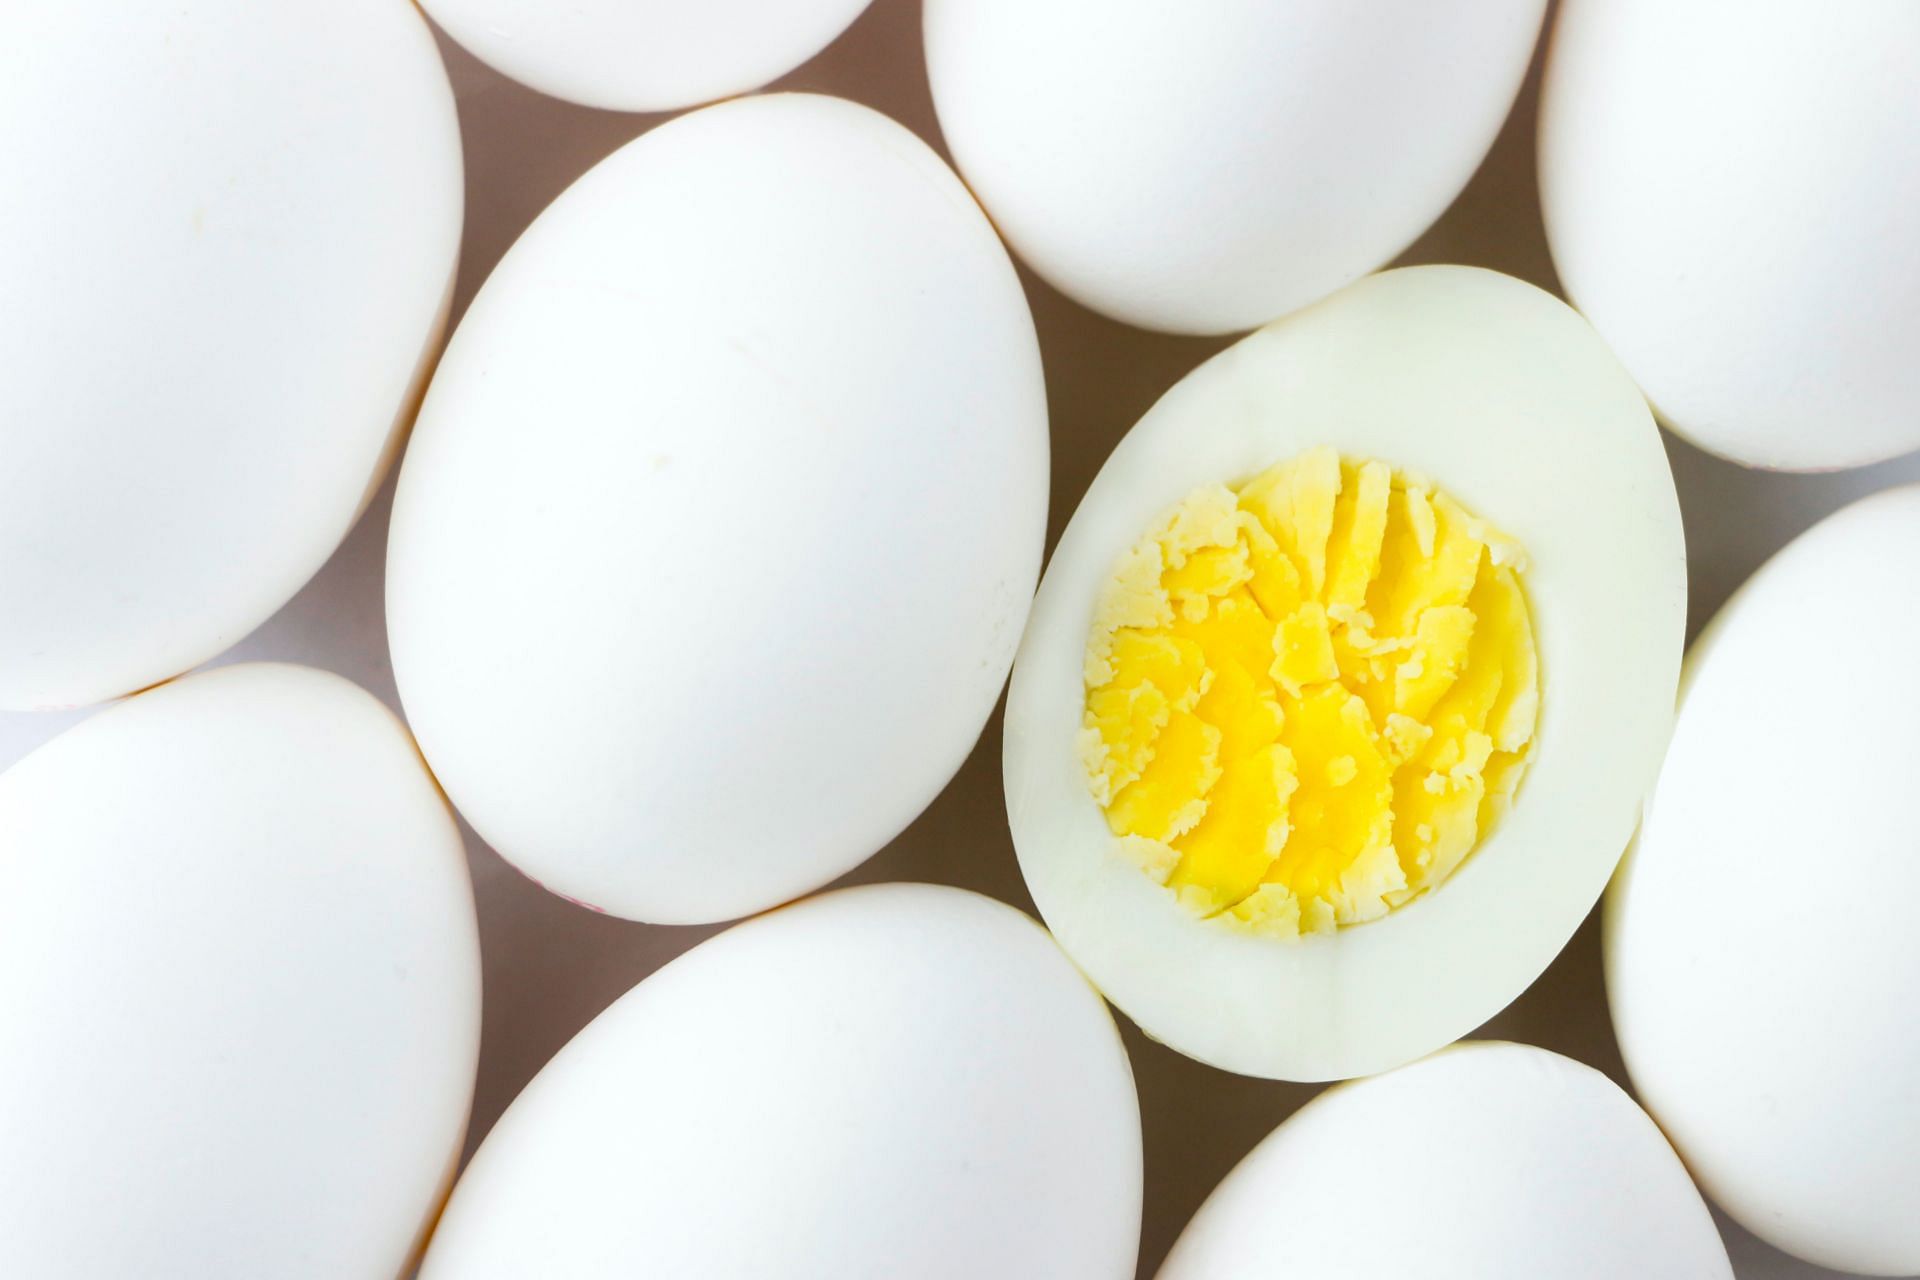 Boiled eggs contain various nutrients. (Image via Unsplash/Mustafa Bashari)